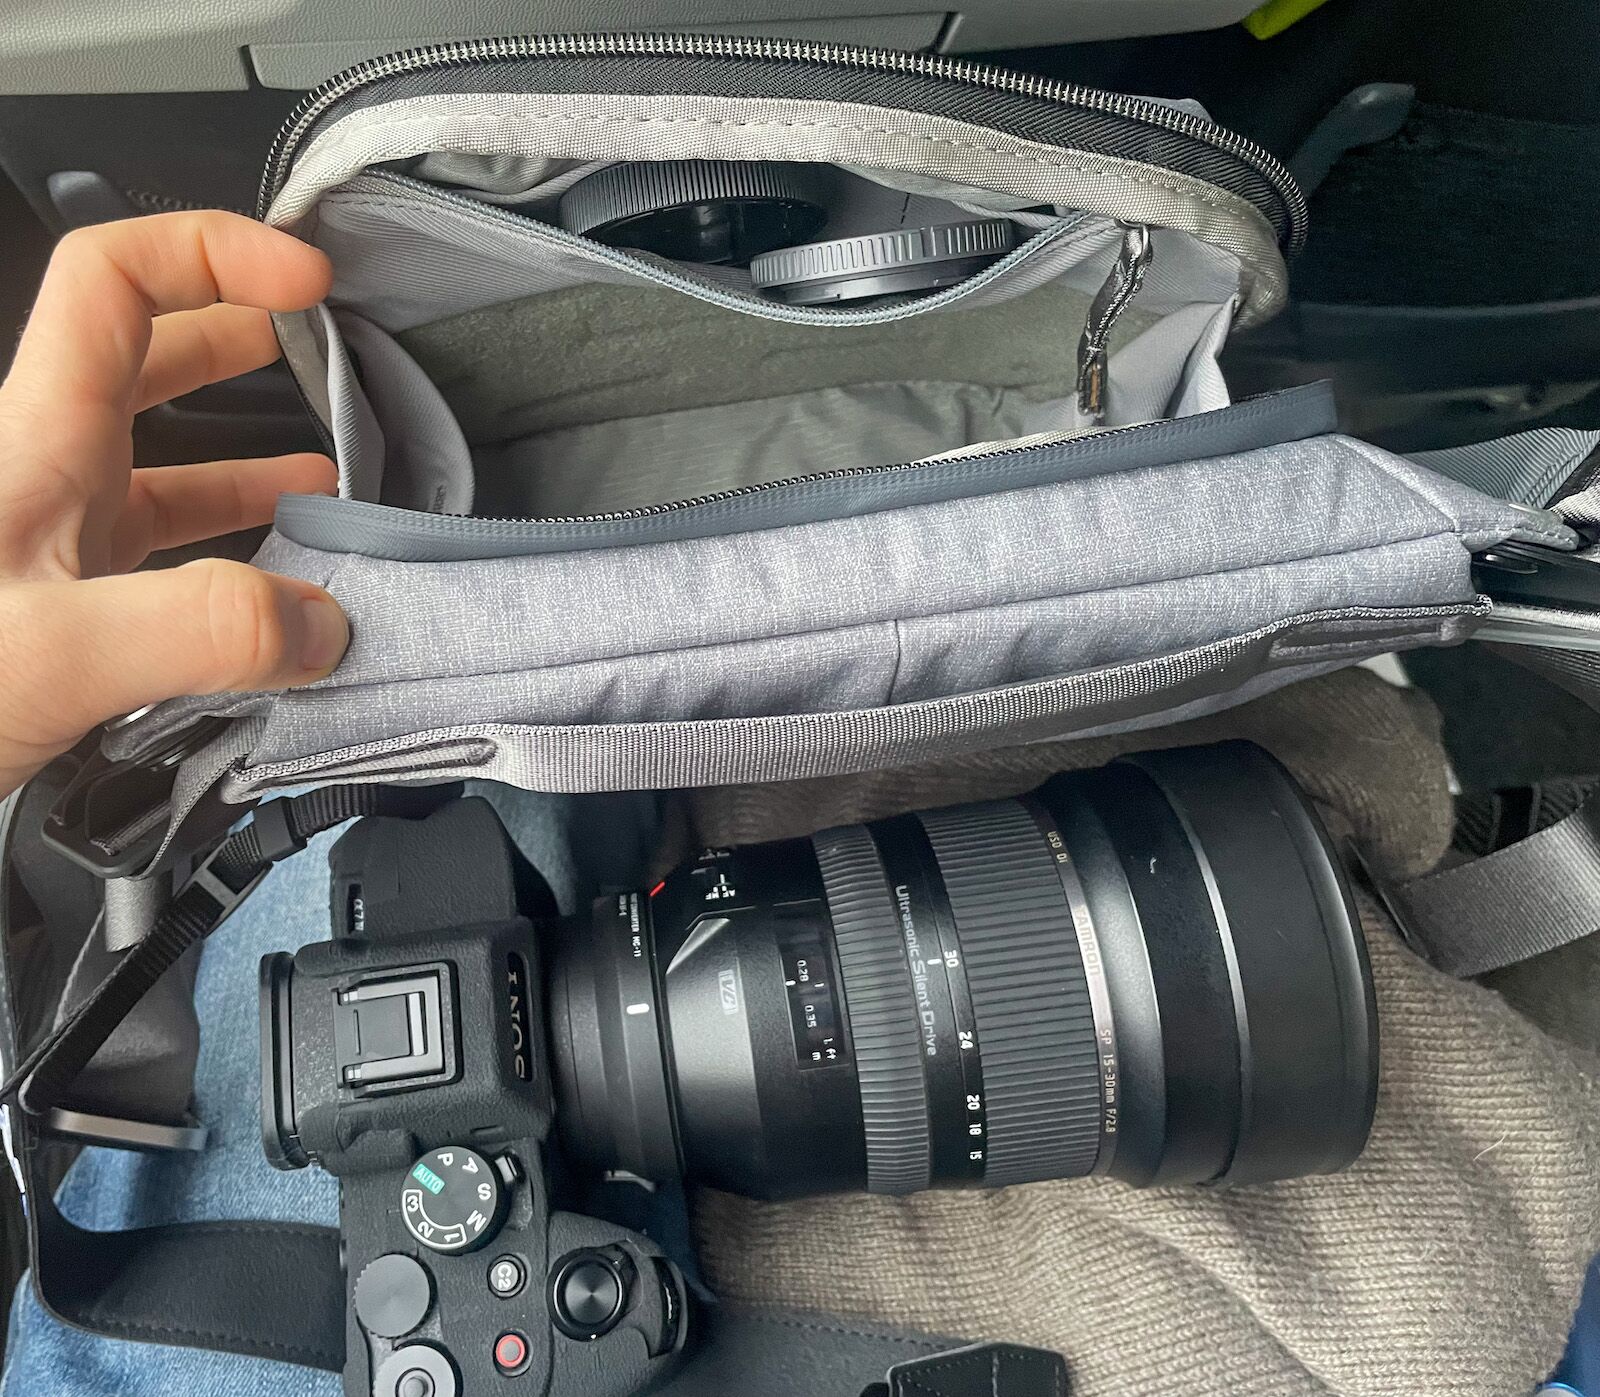 Peak Design Sling Bag next to large camera lens